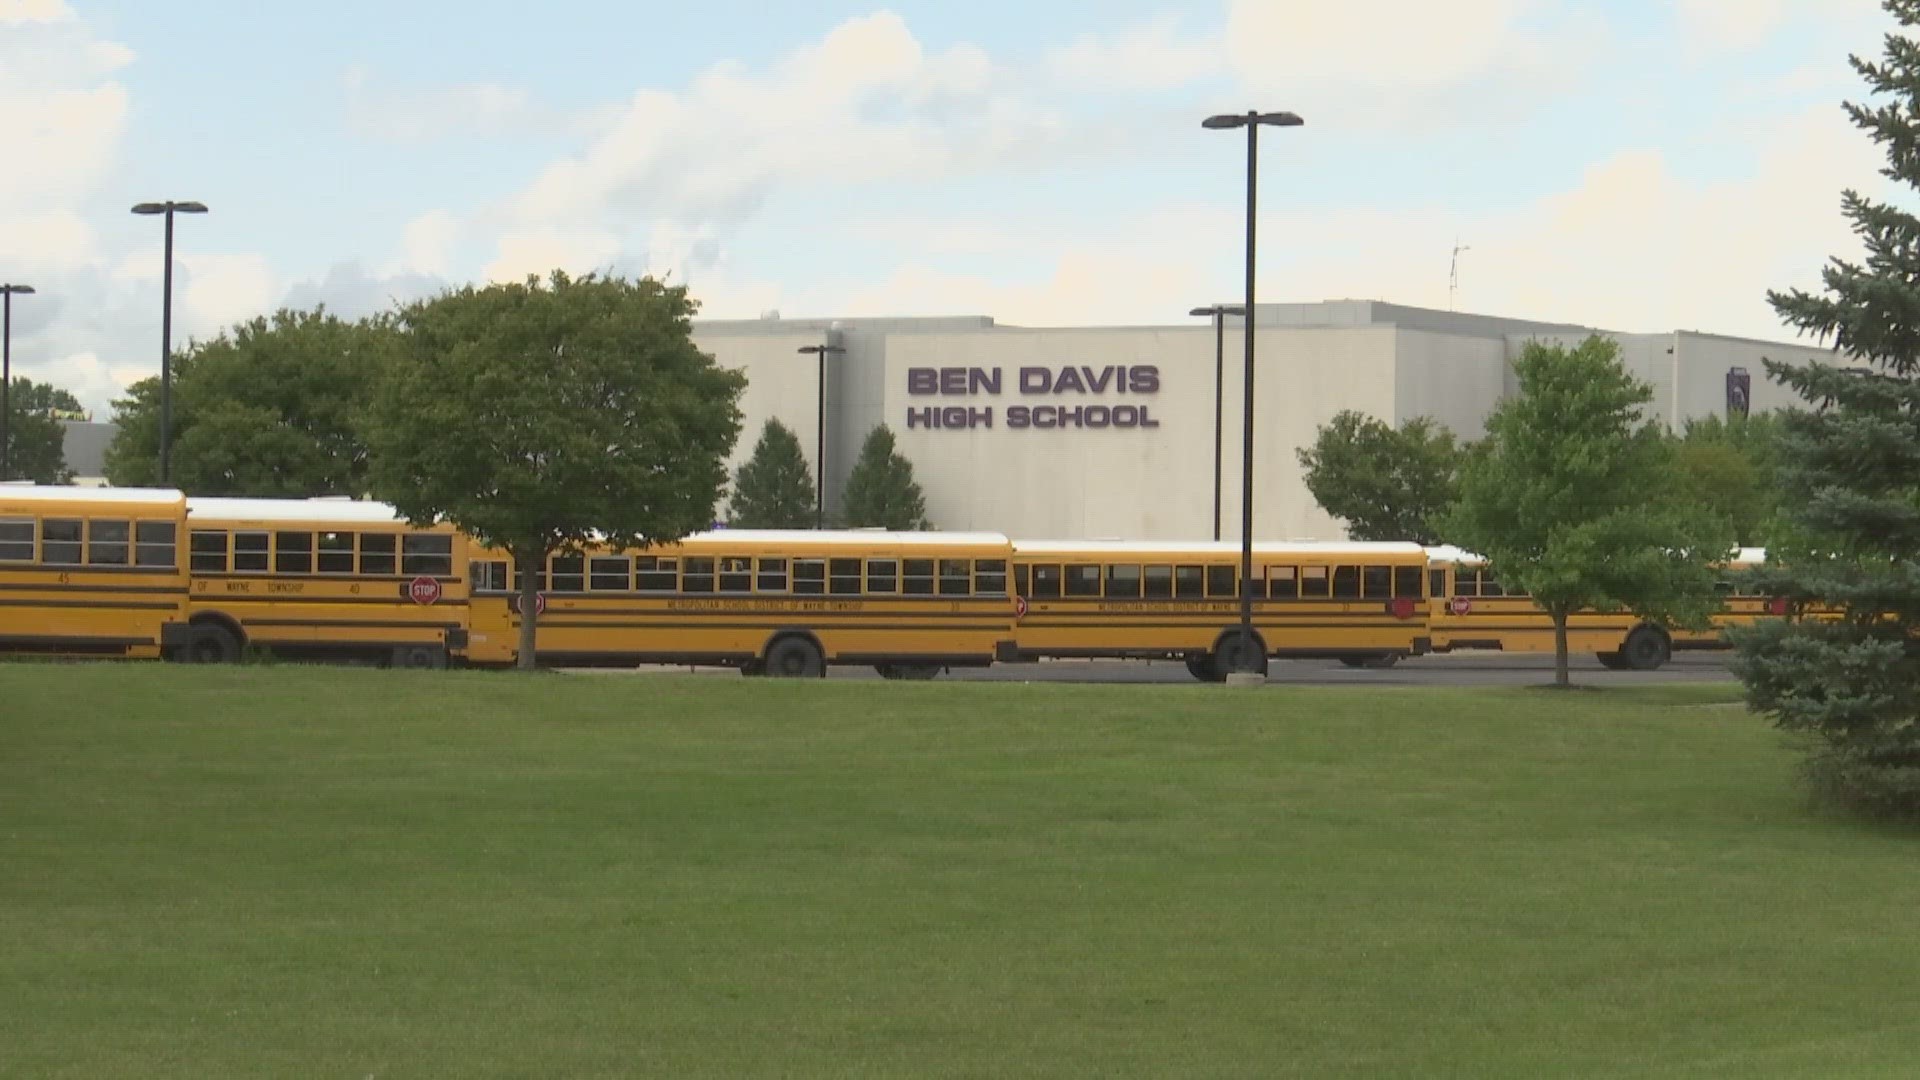 Wayne Township Schools confirms an investigation is underway.